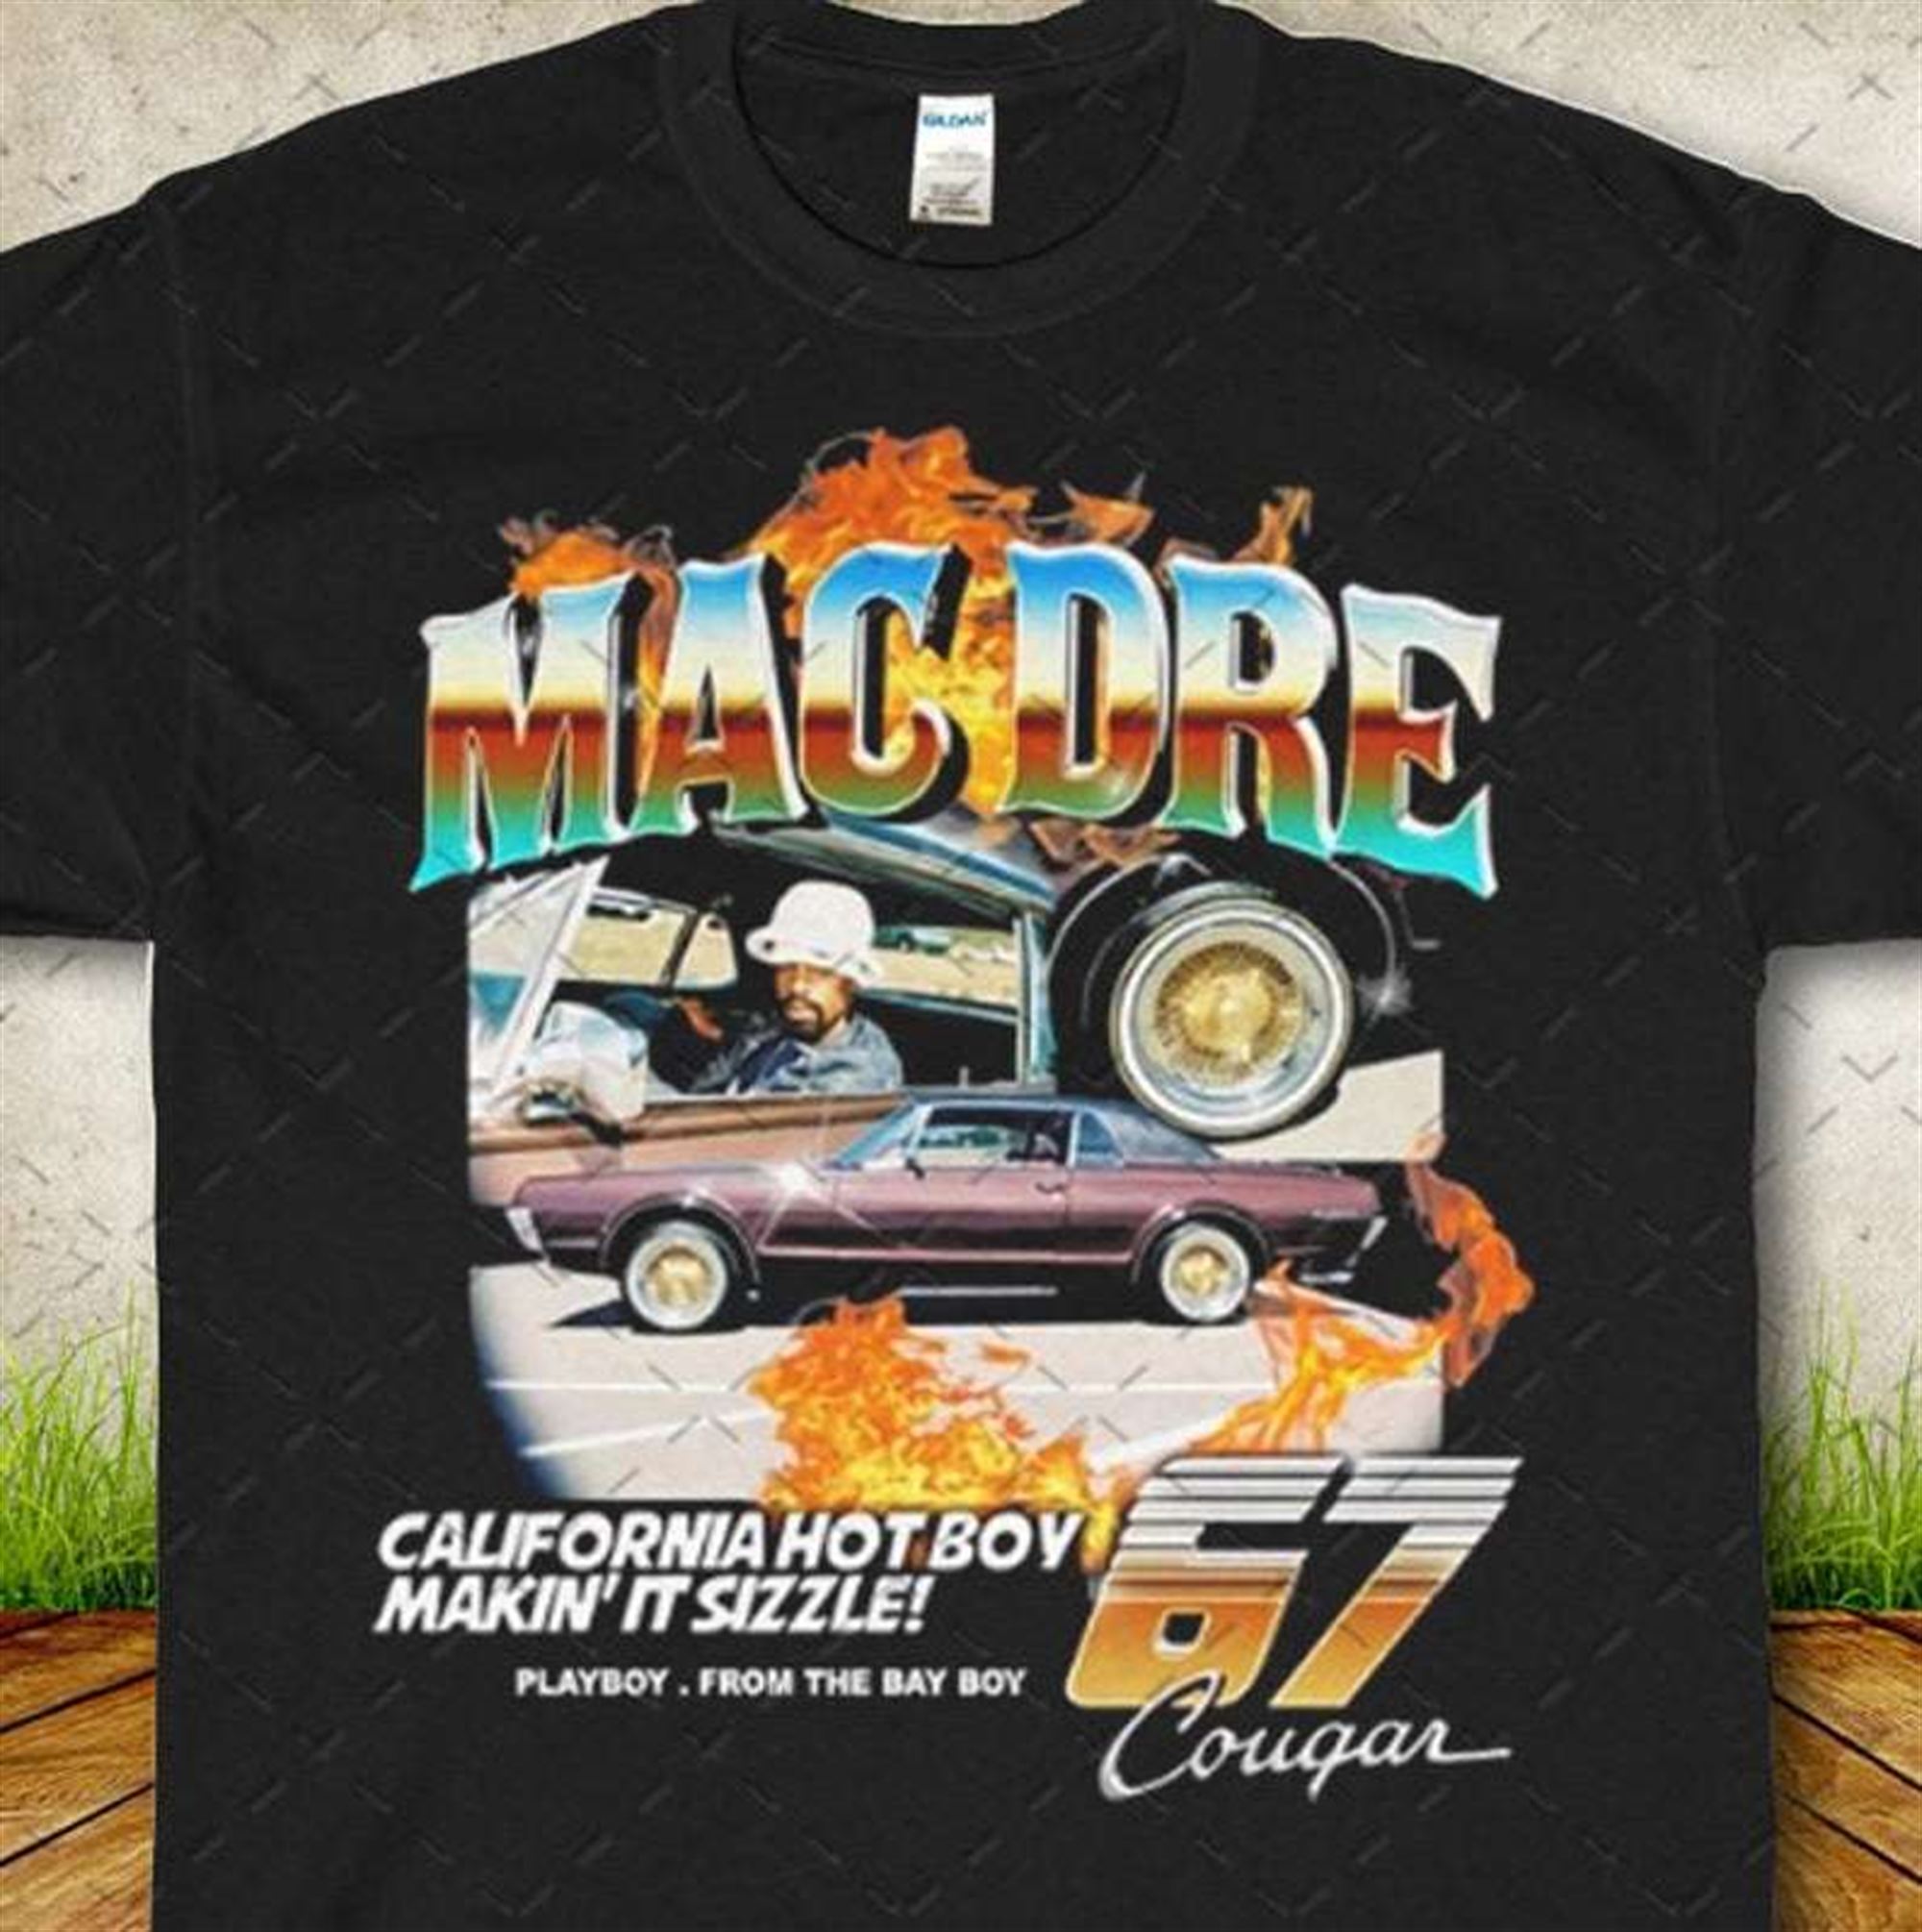 Mac Dre Rap Retro Vintage T Shirt Full Size Up To 5xl